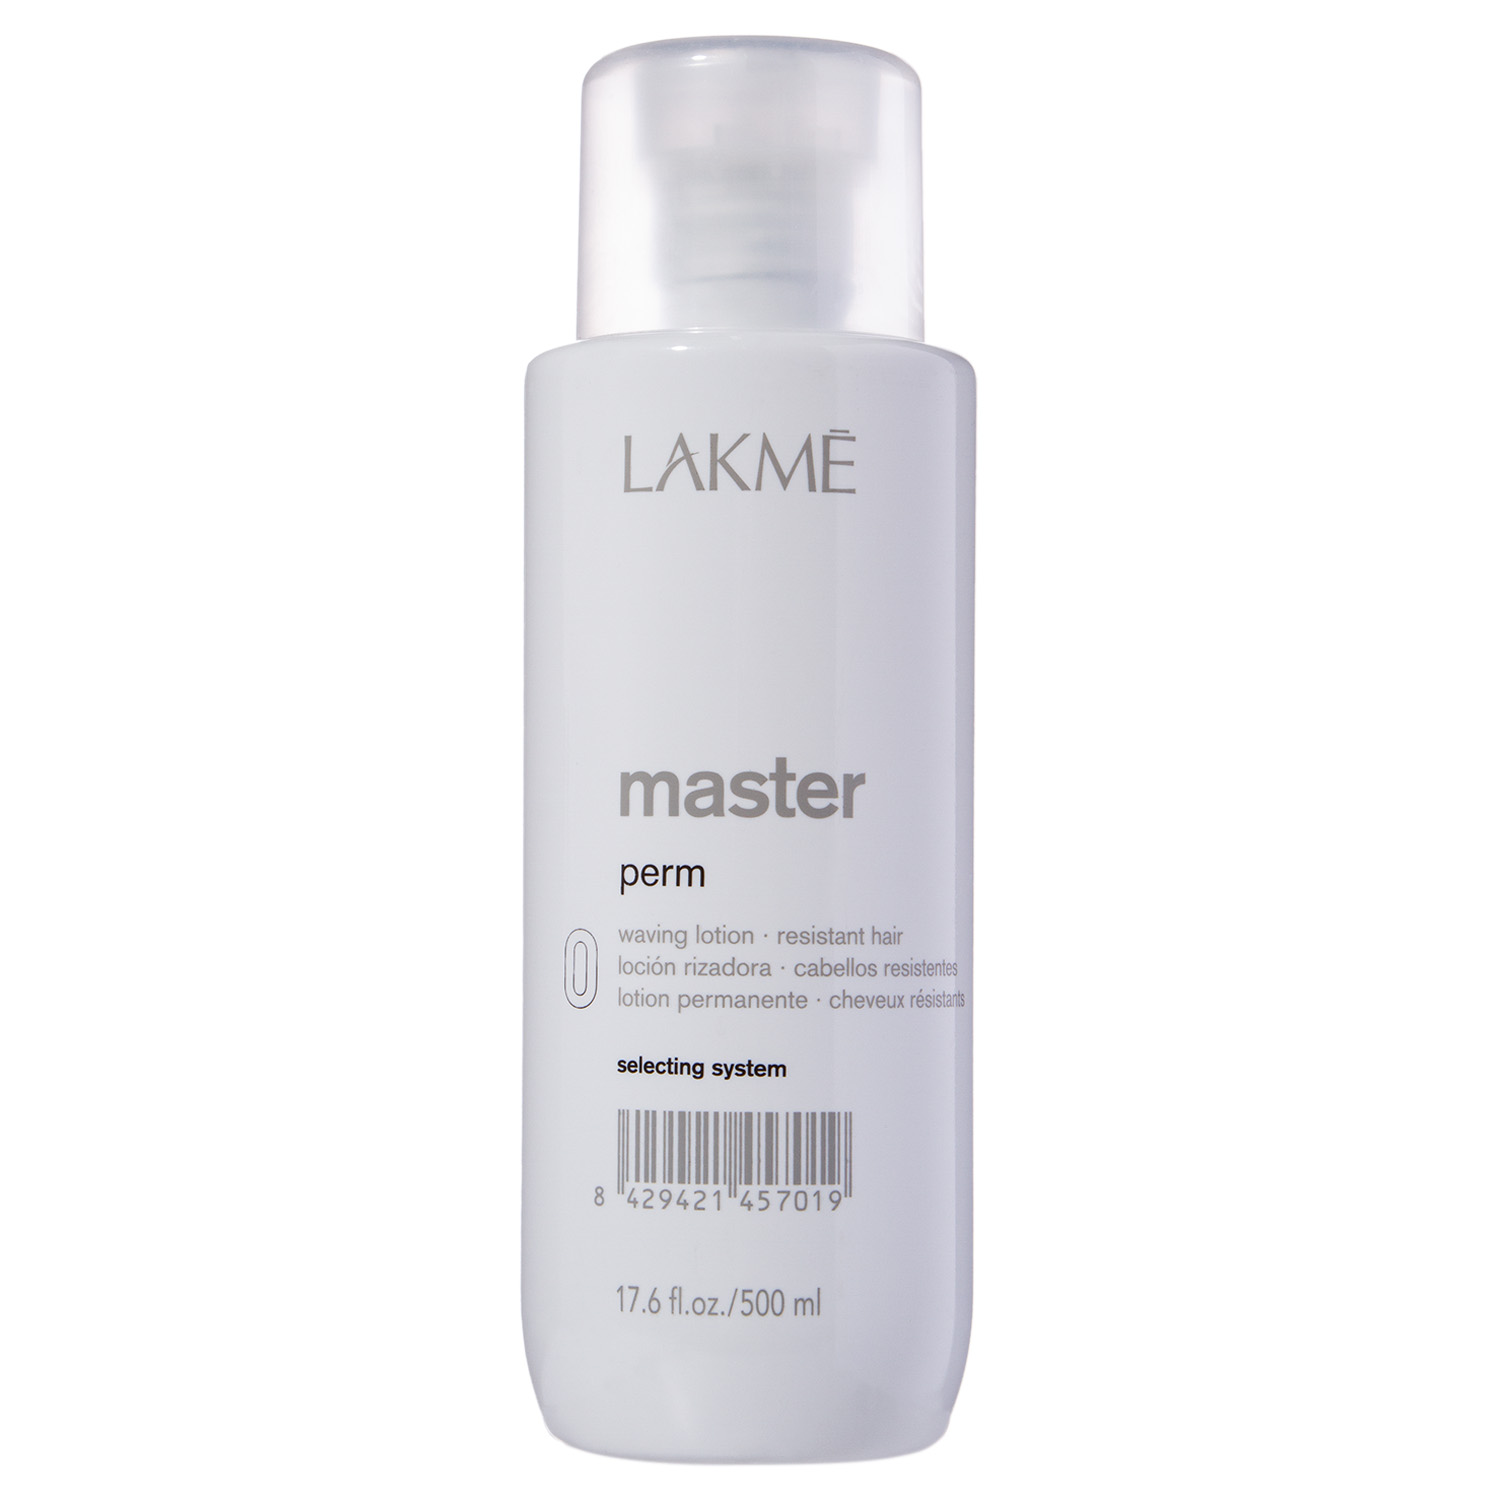 Lakme Лосьон для завивки натуральных и трудноподдающихся волос 0 Perm Waving Lotion 0, 500 мл (Lakme, Master)